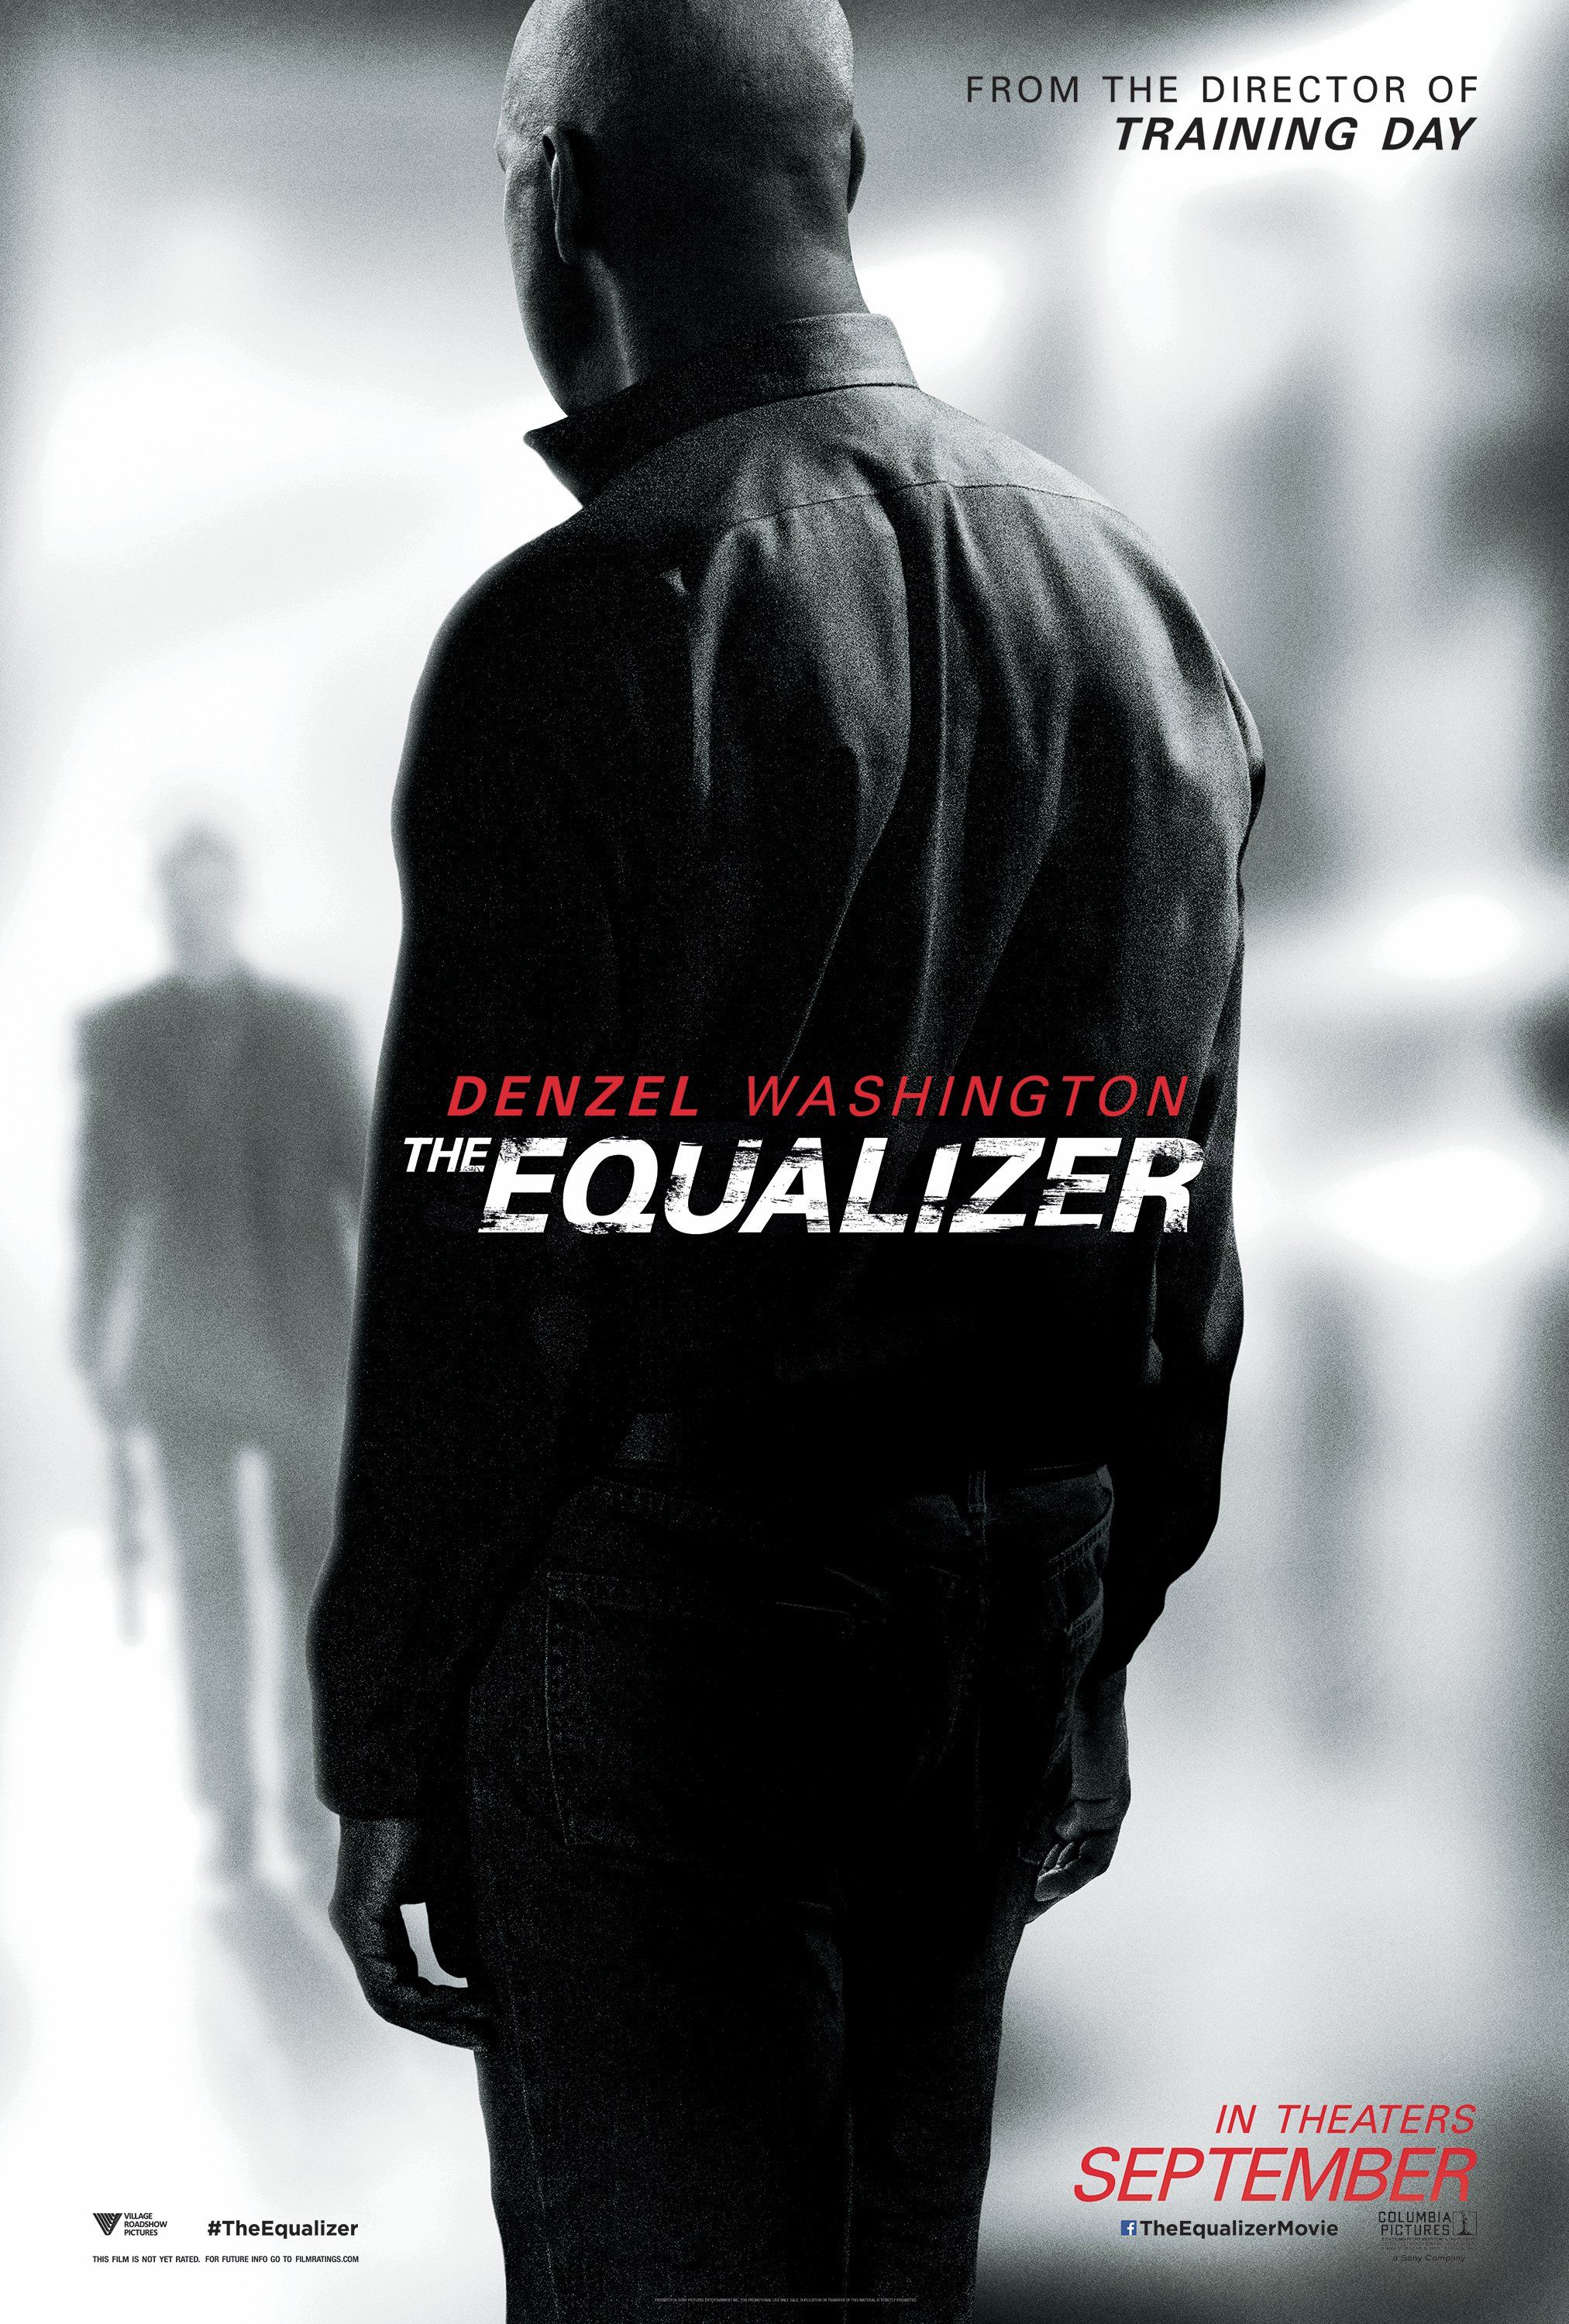 The Equalizer 2 Filming Starts in 2017; Antoine Fuqua Returns